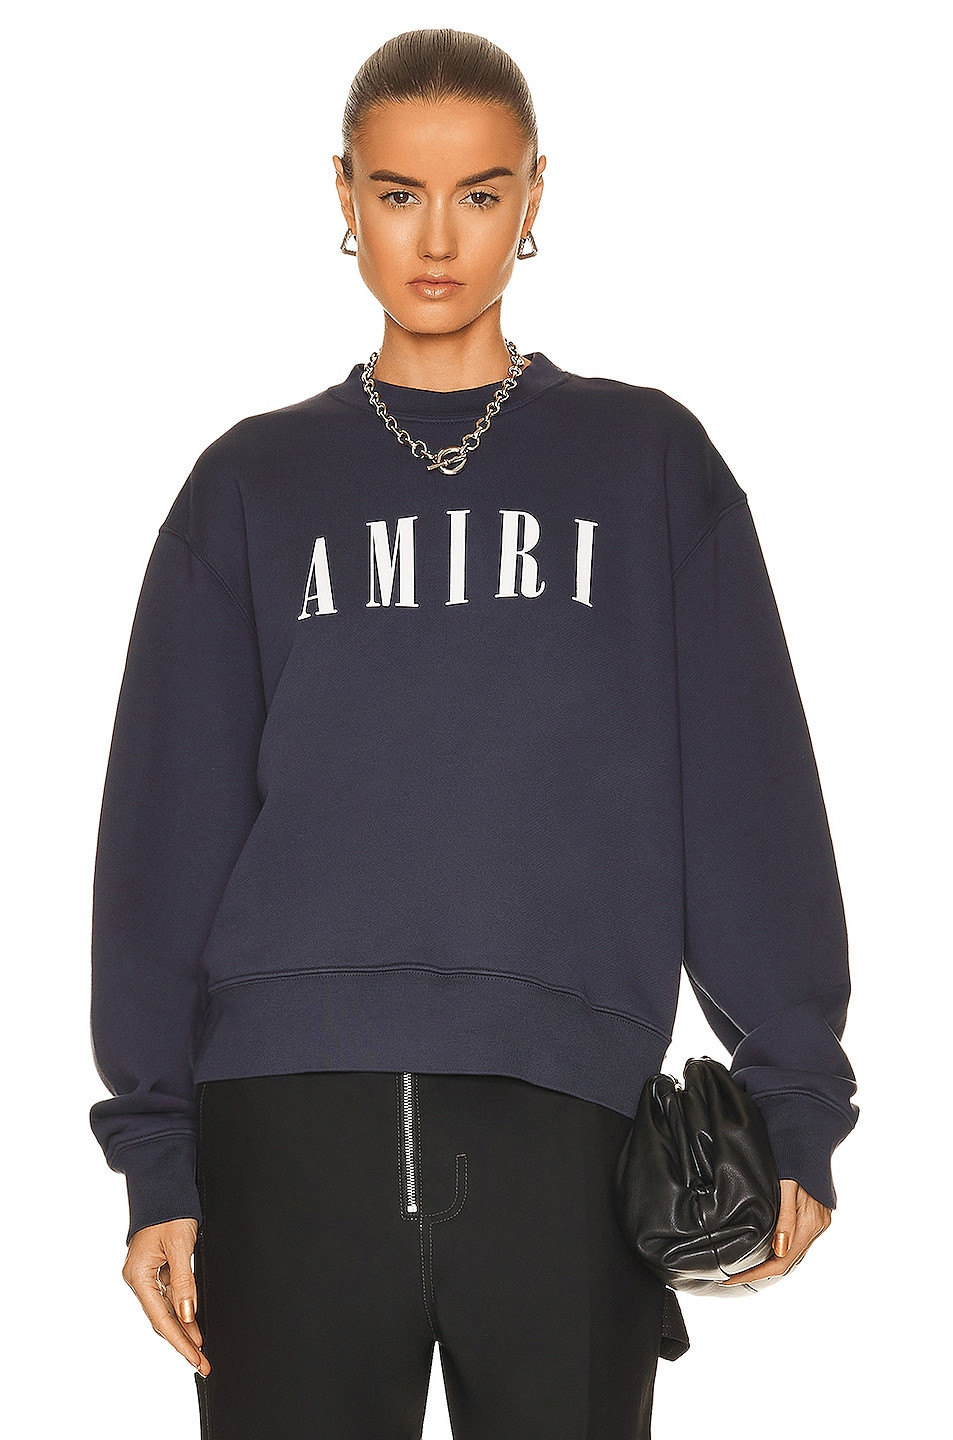 Amiri Logo Crew Sweatshirt in Navy